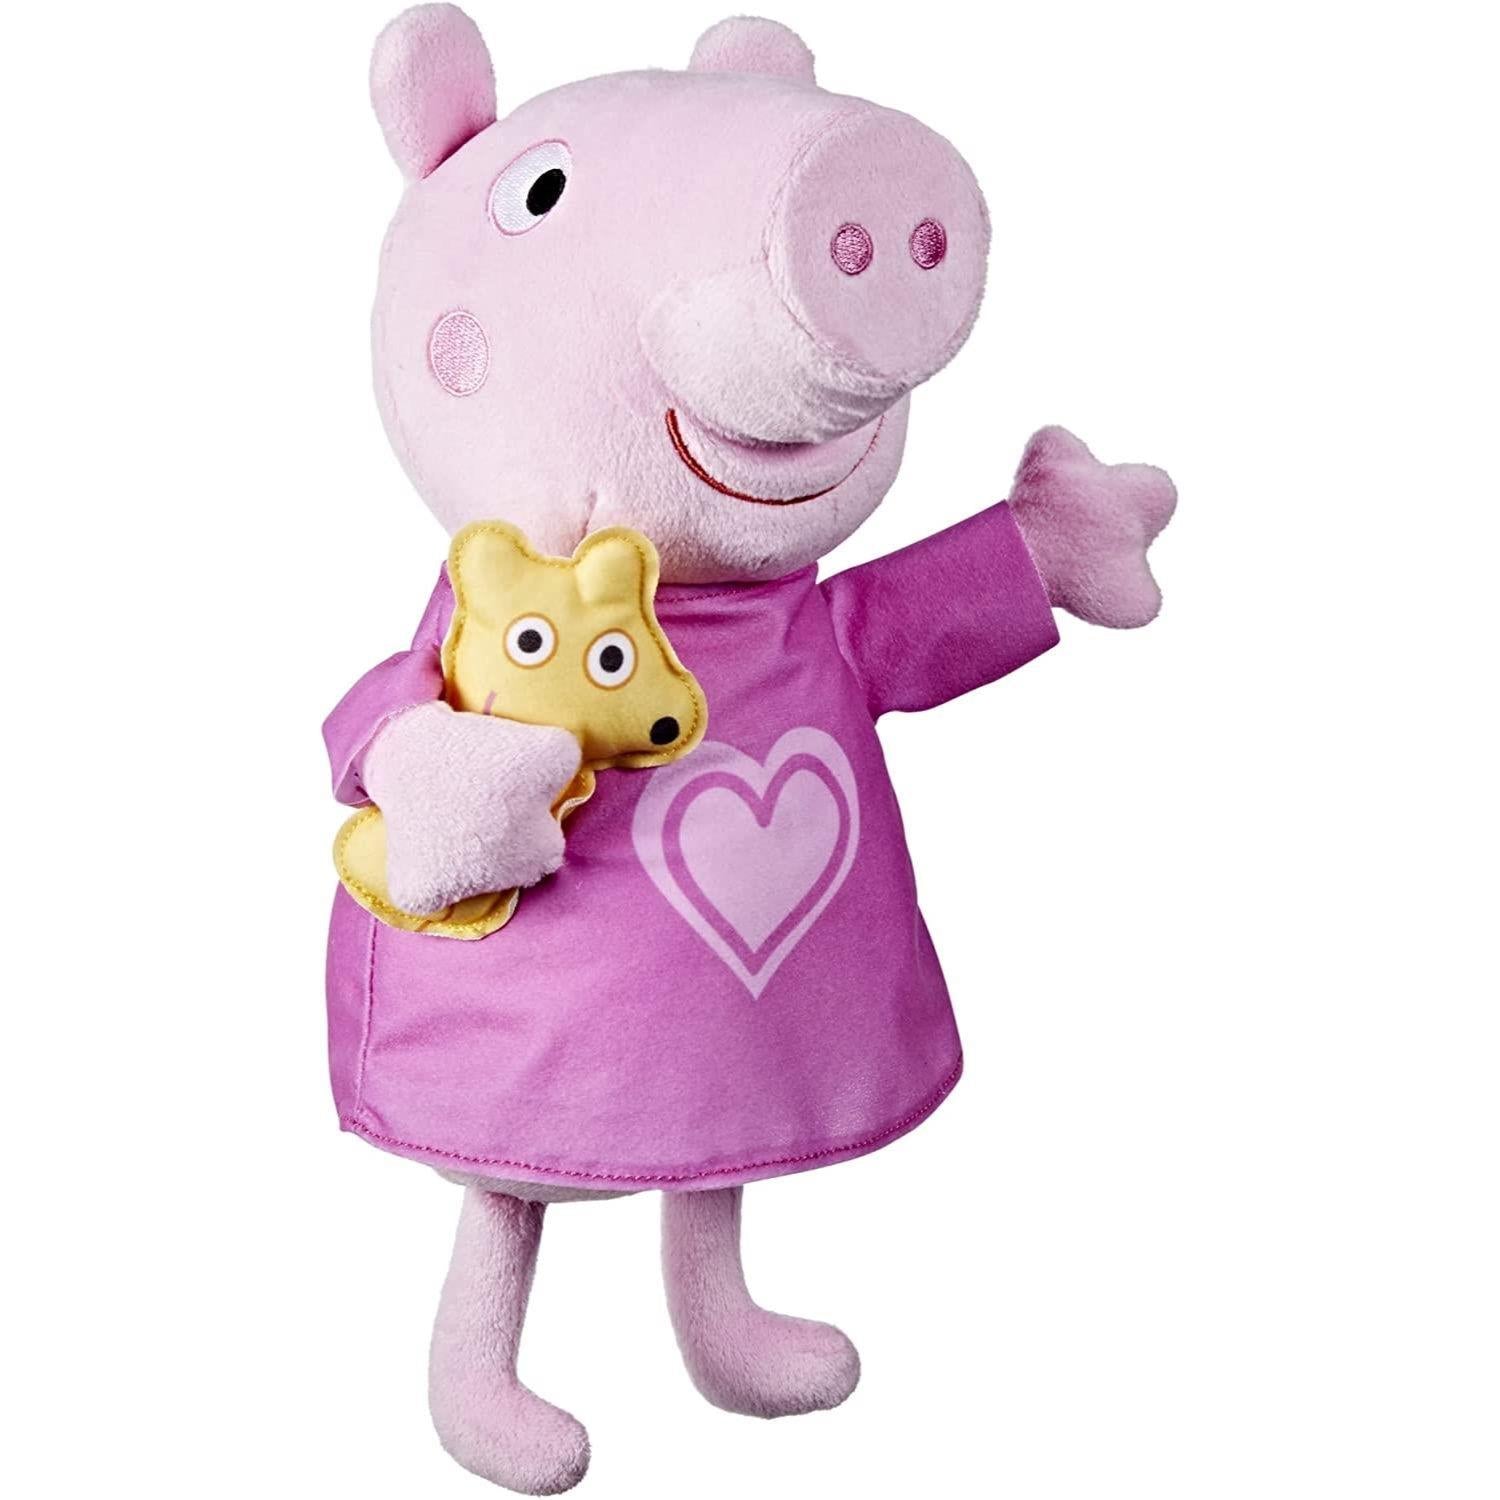 Peppa Pig Plush Toy Peppa Pig Peppa's Bedtime Lullabies Plush Doll